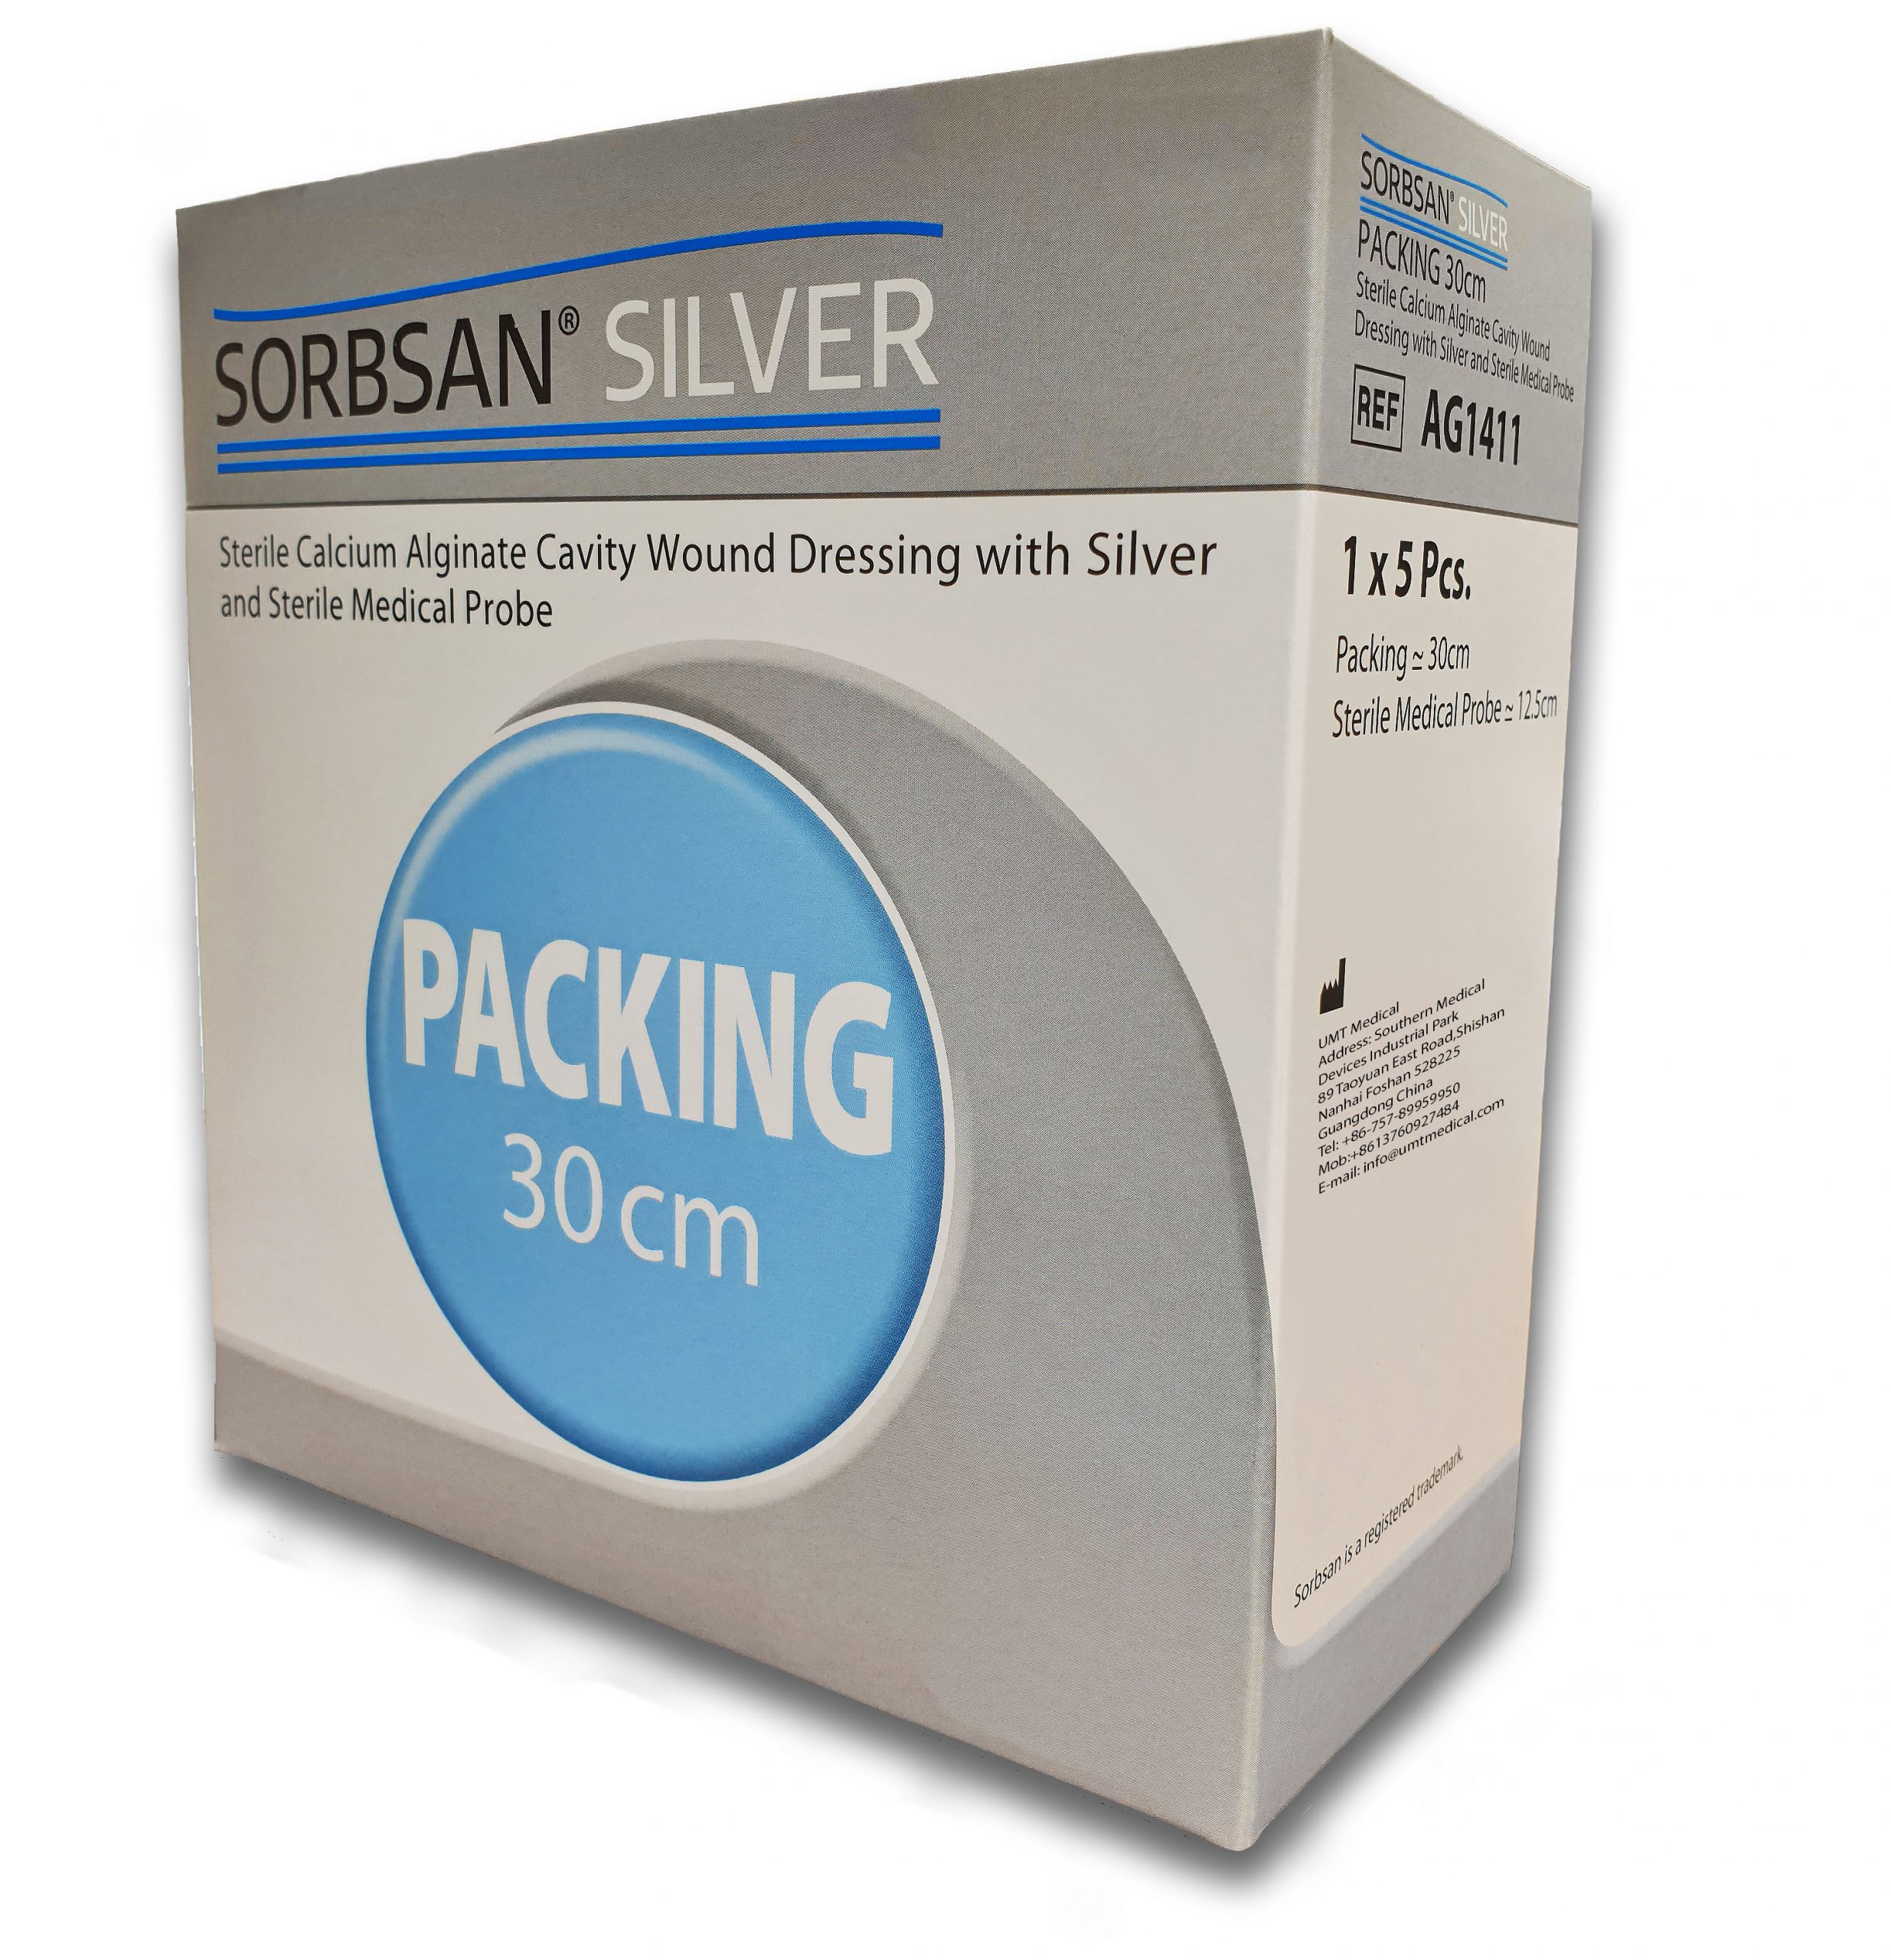 Sorbsan Silver Packing